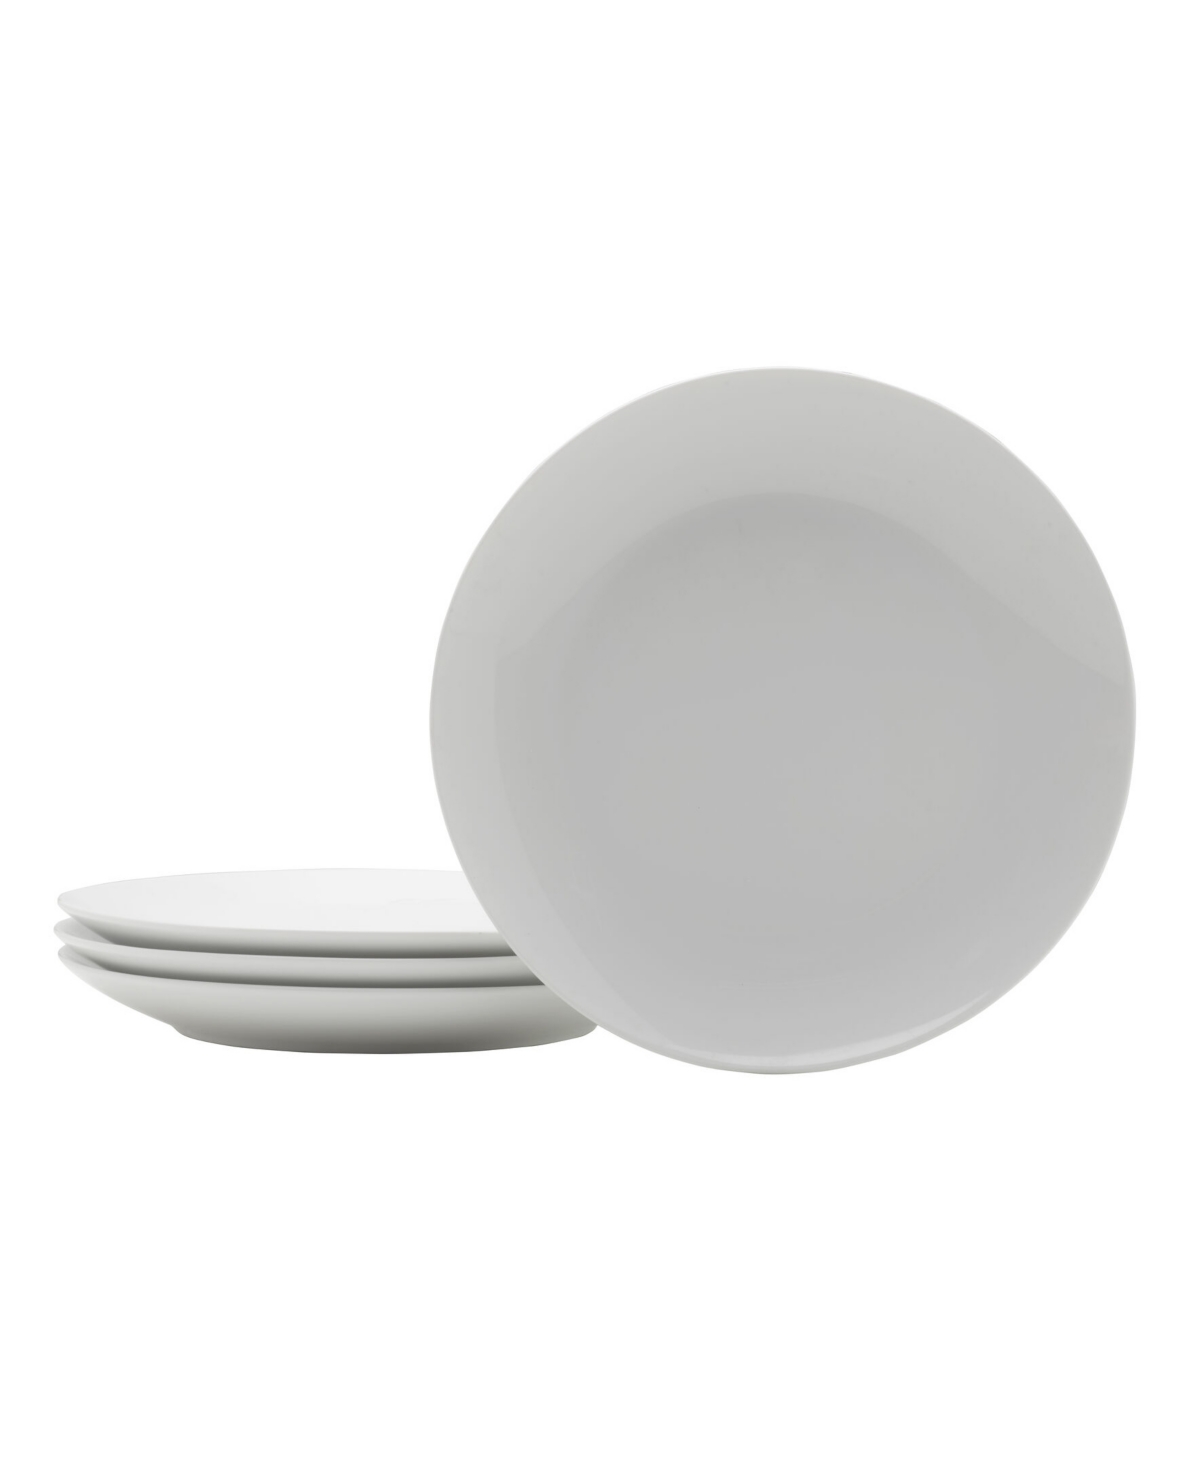 Everyday Whiteware Coupe Rim Salad Plate 4 Piece Set - White